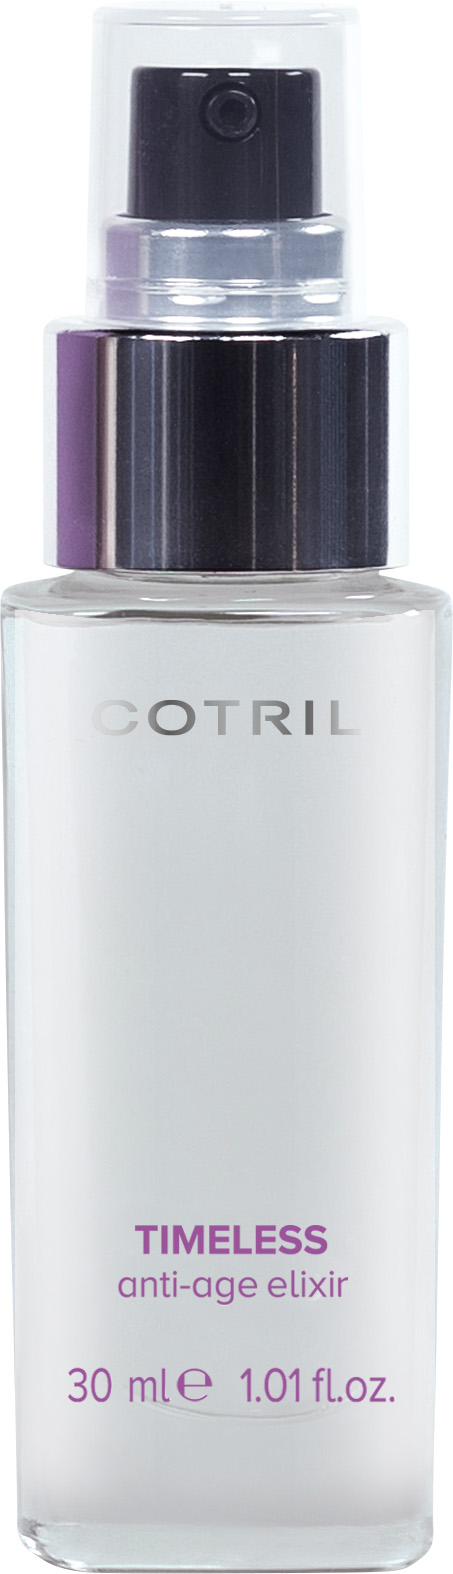 Cotril Timeless  Anti-Age Elixir 30ml